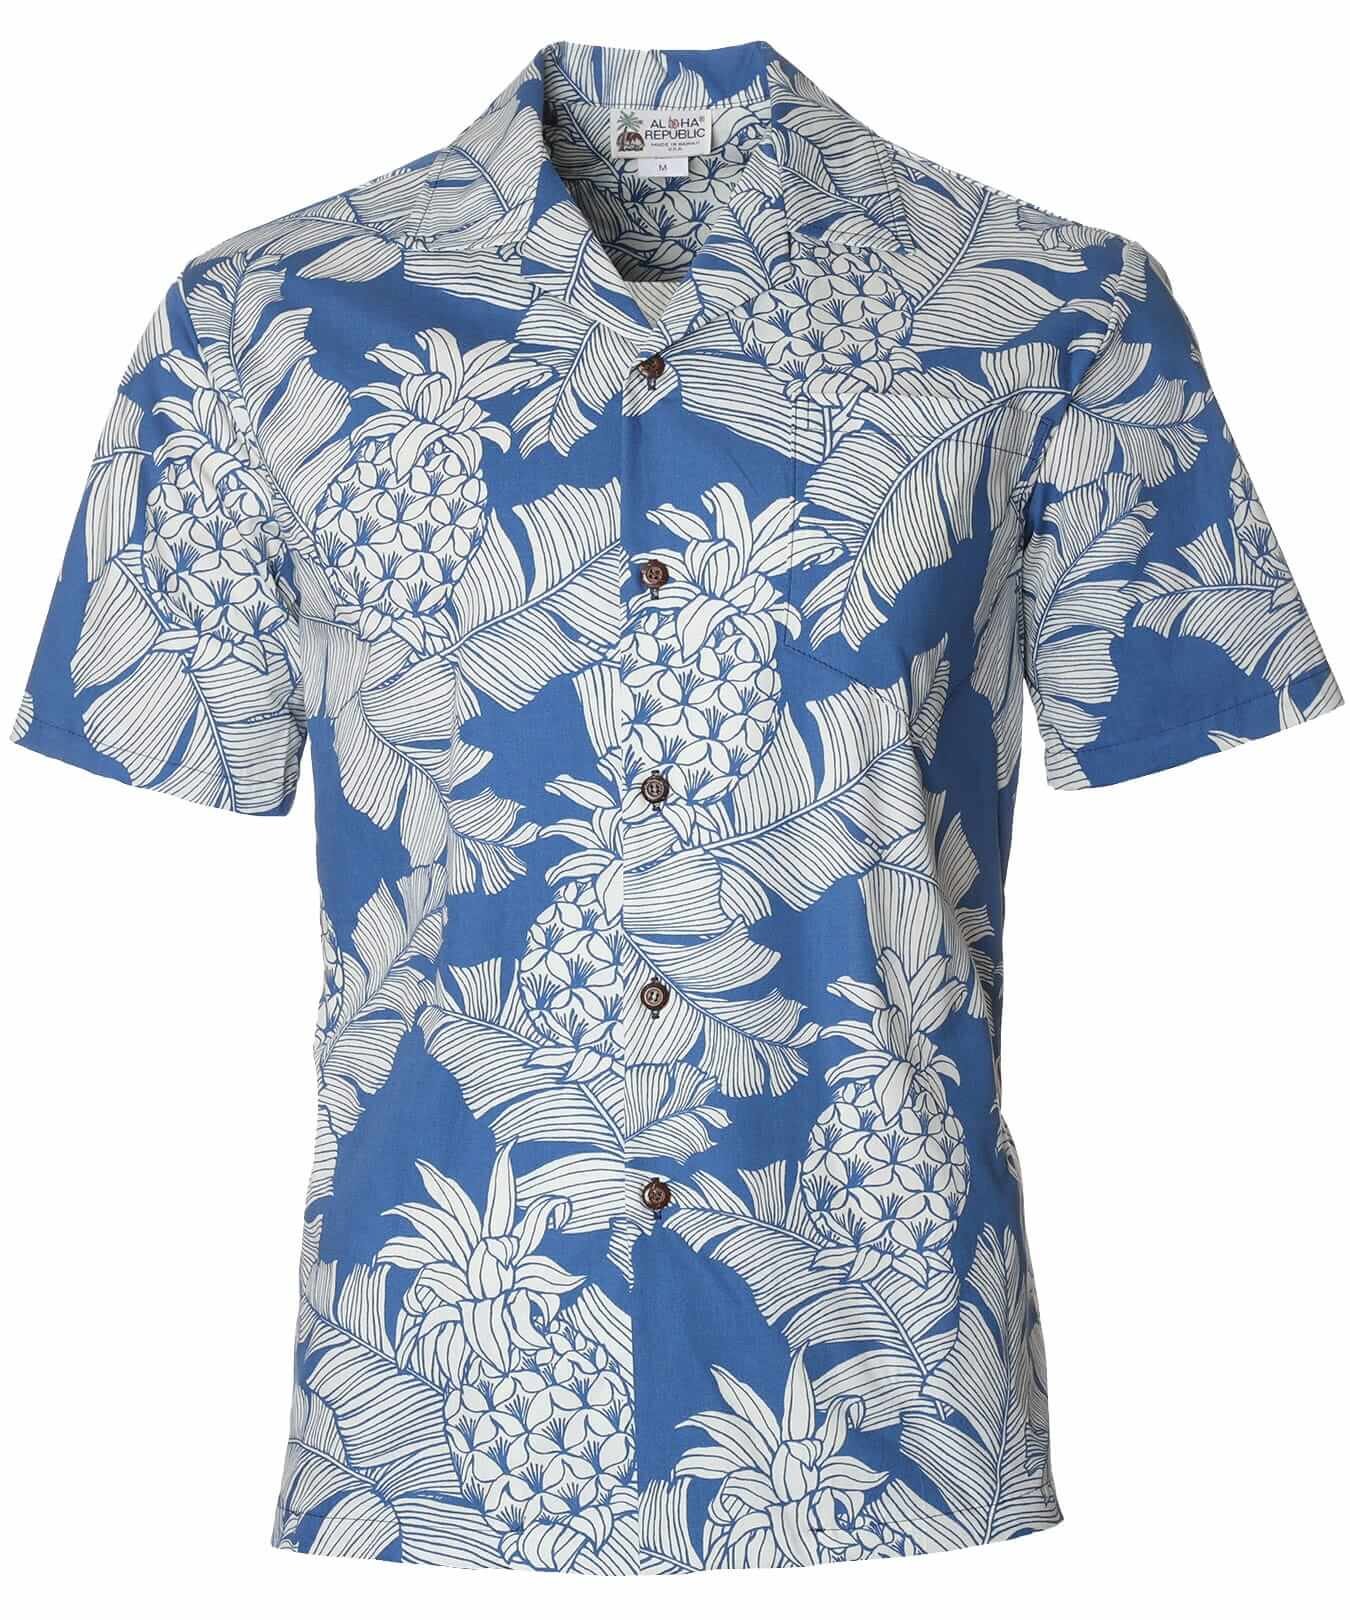 Pineapple Aloha Cotton Shirt for Men